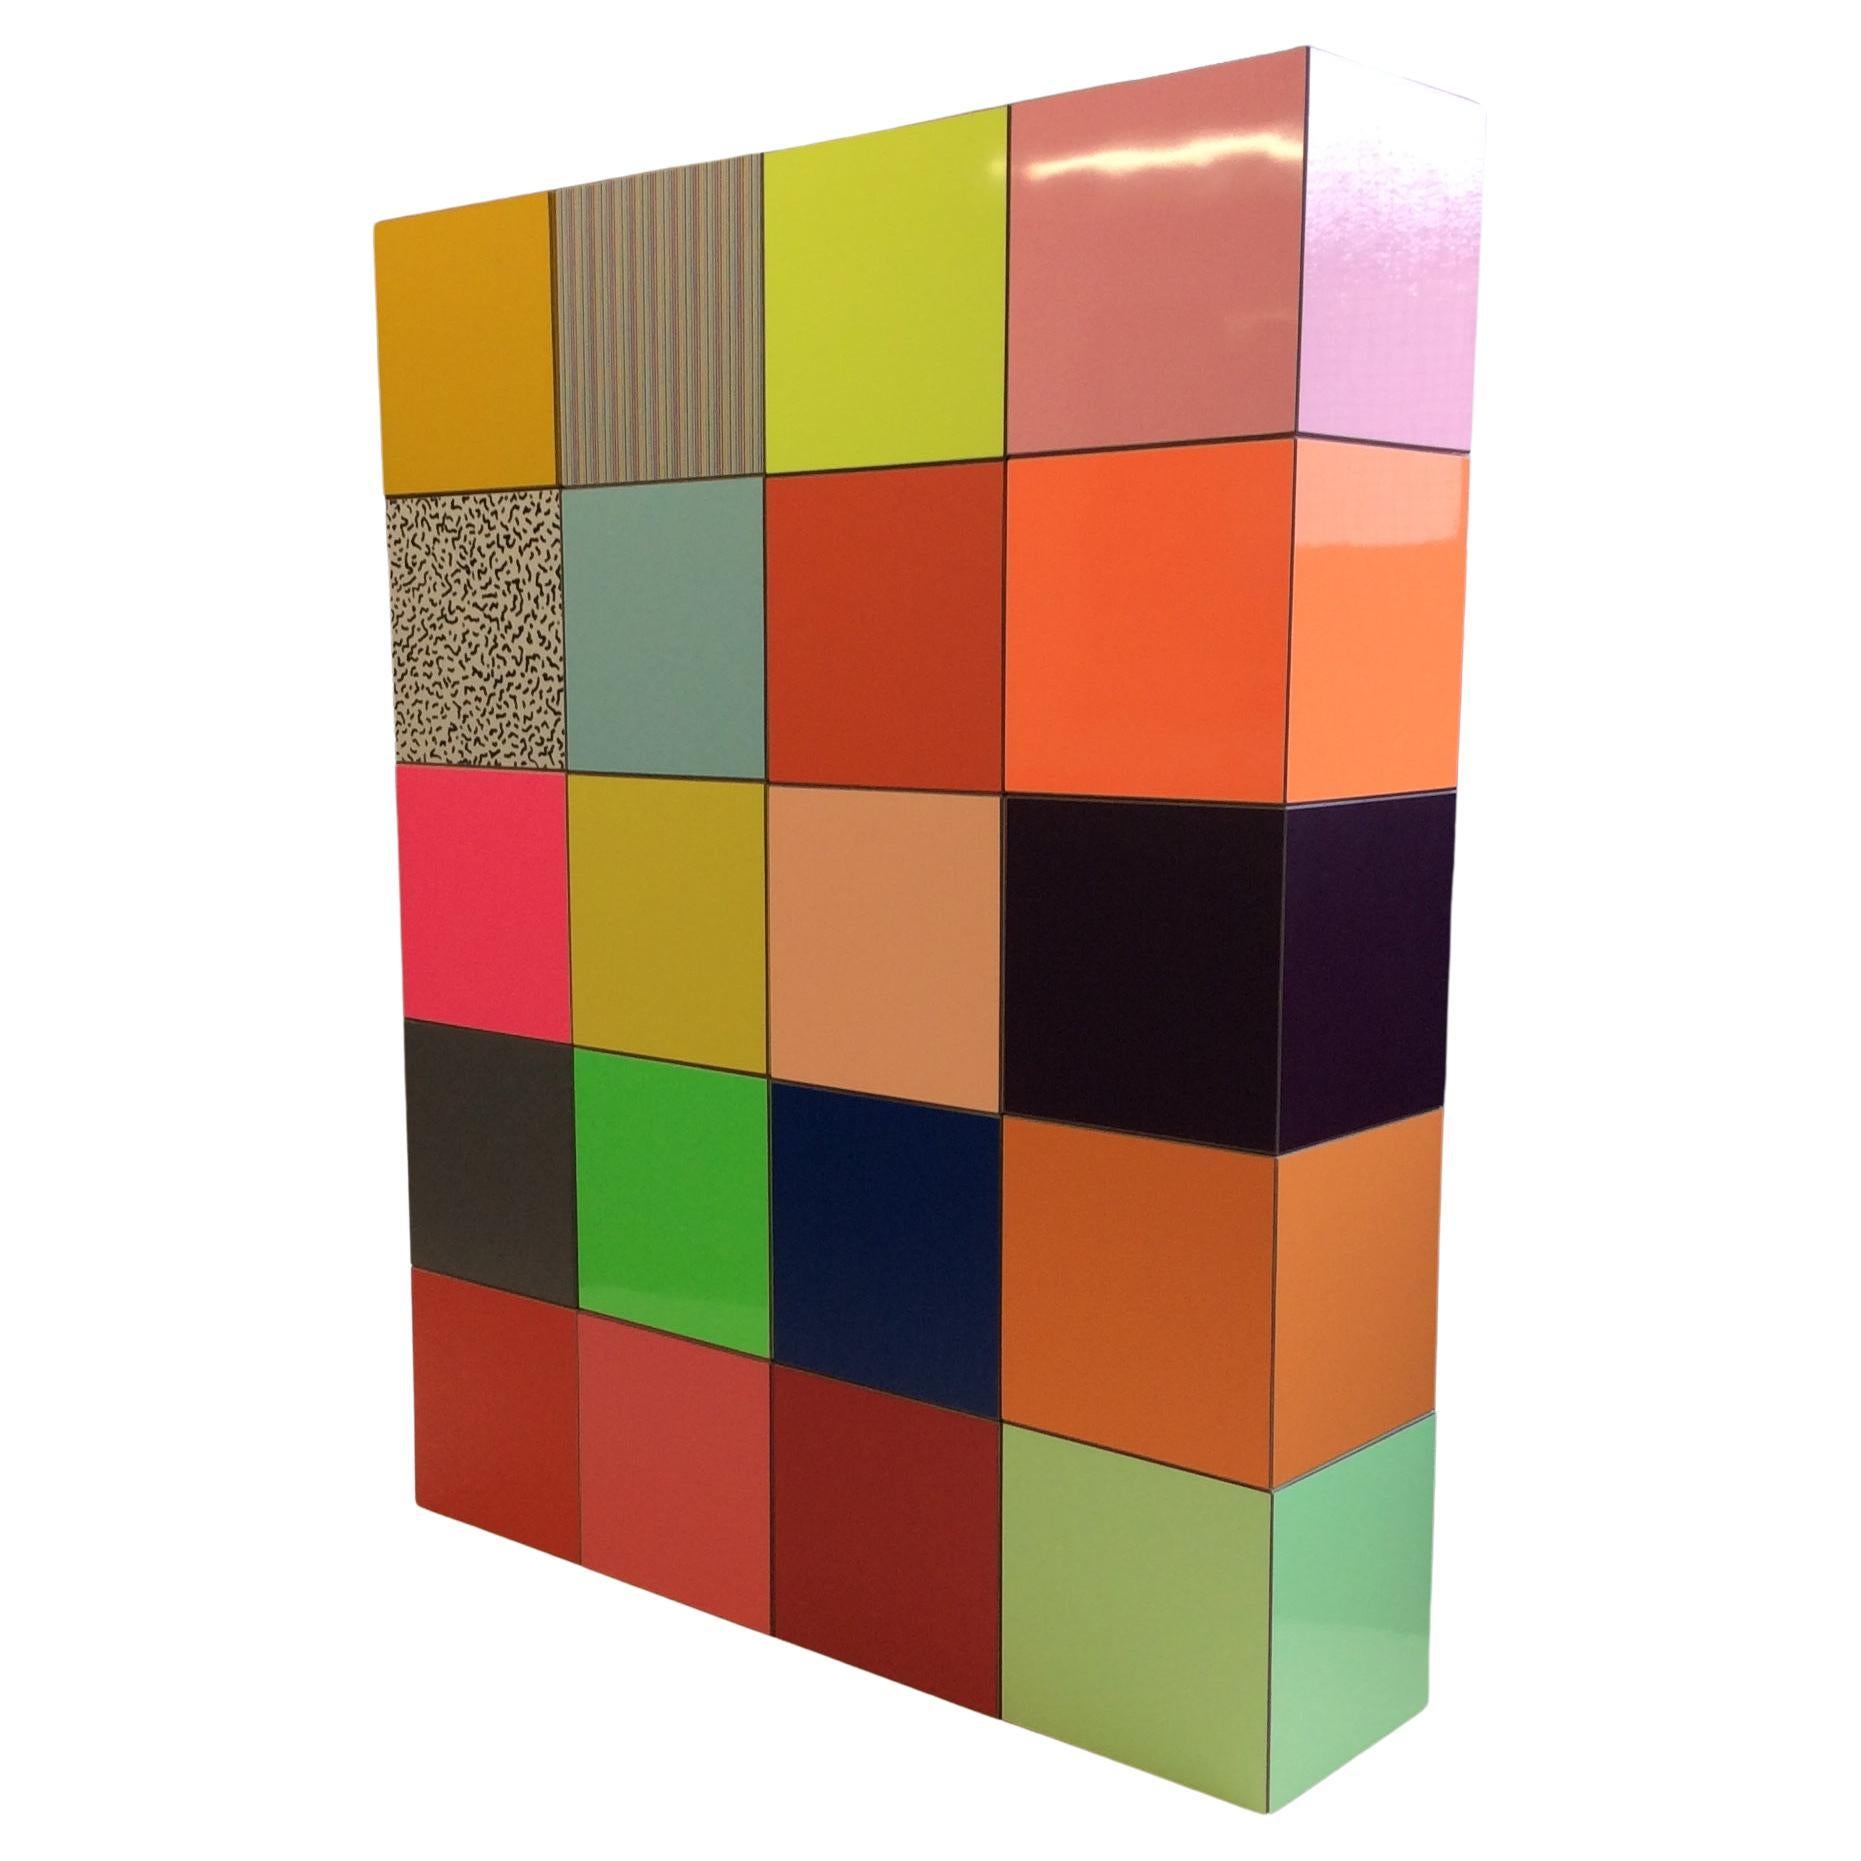 Abet Laminati magnetic cubes For Sale